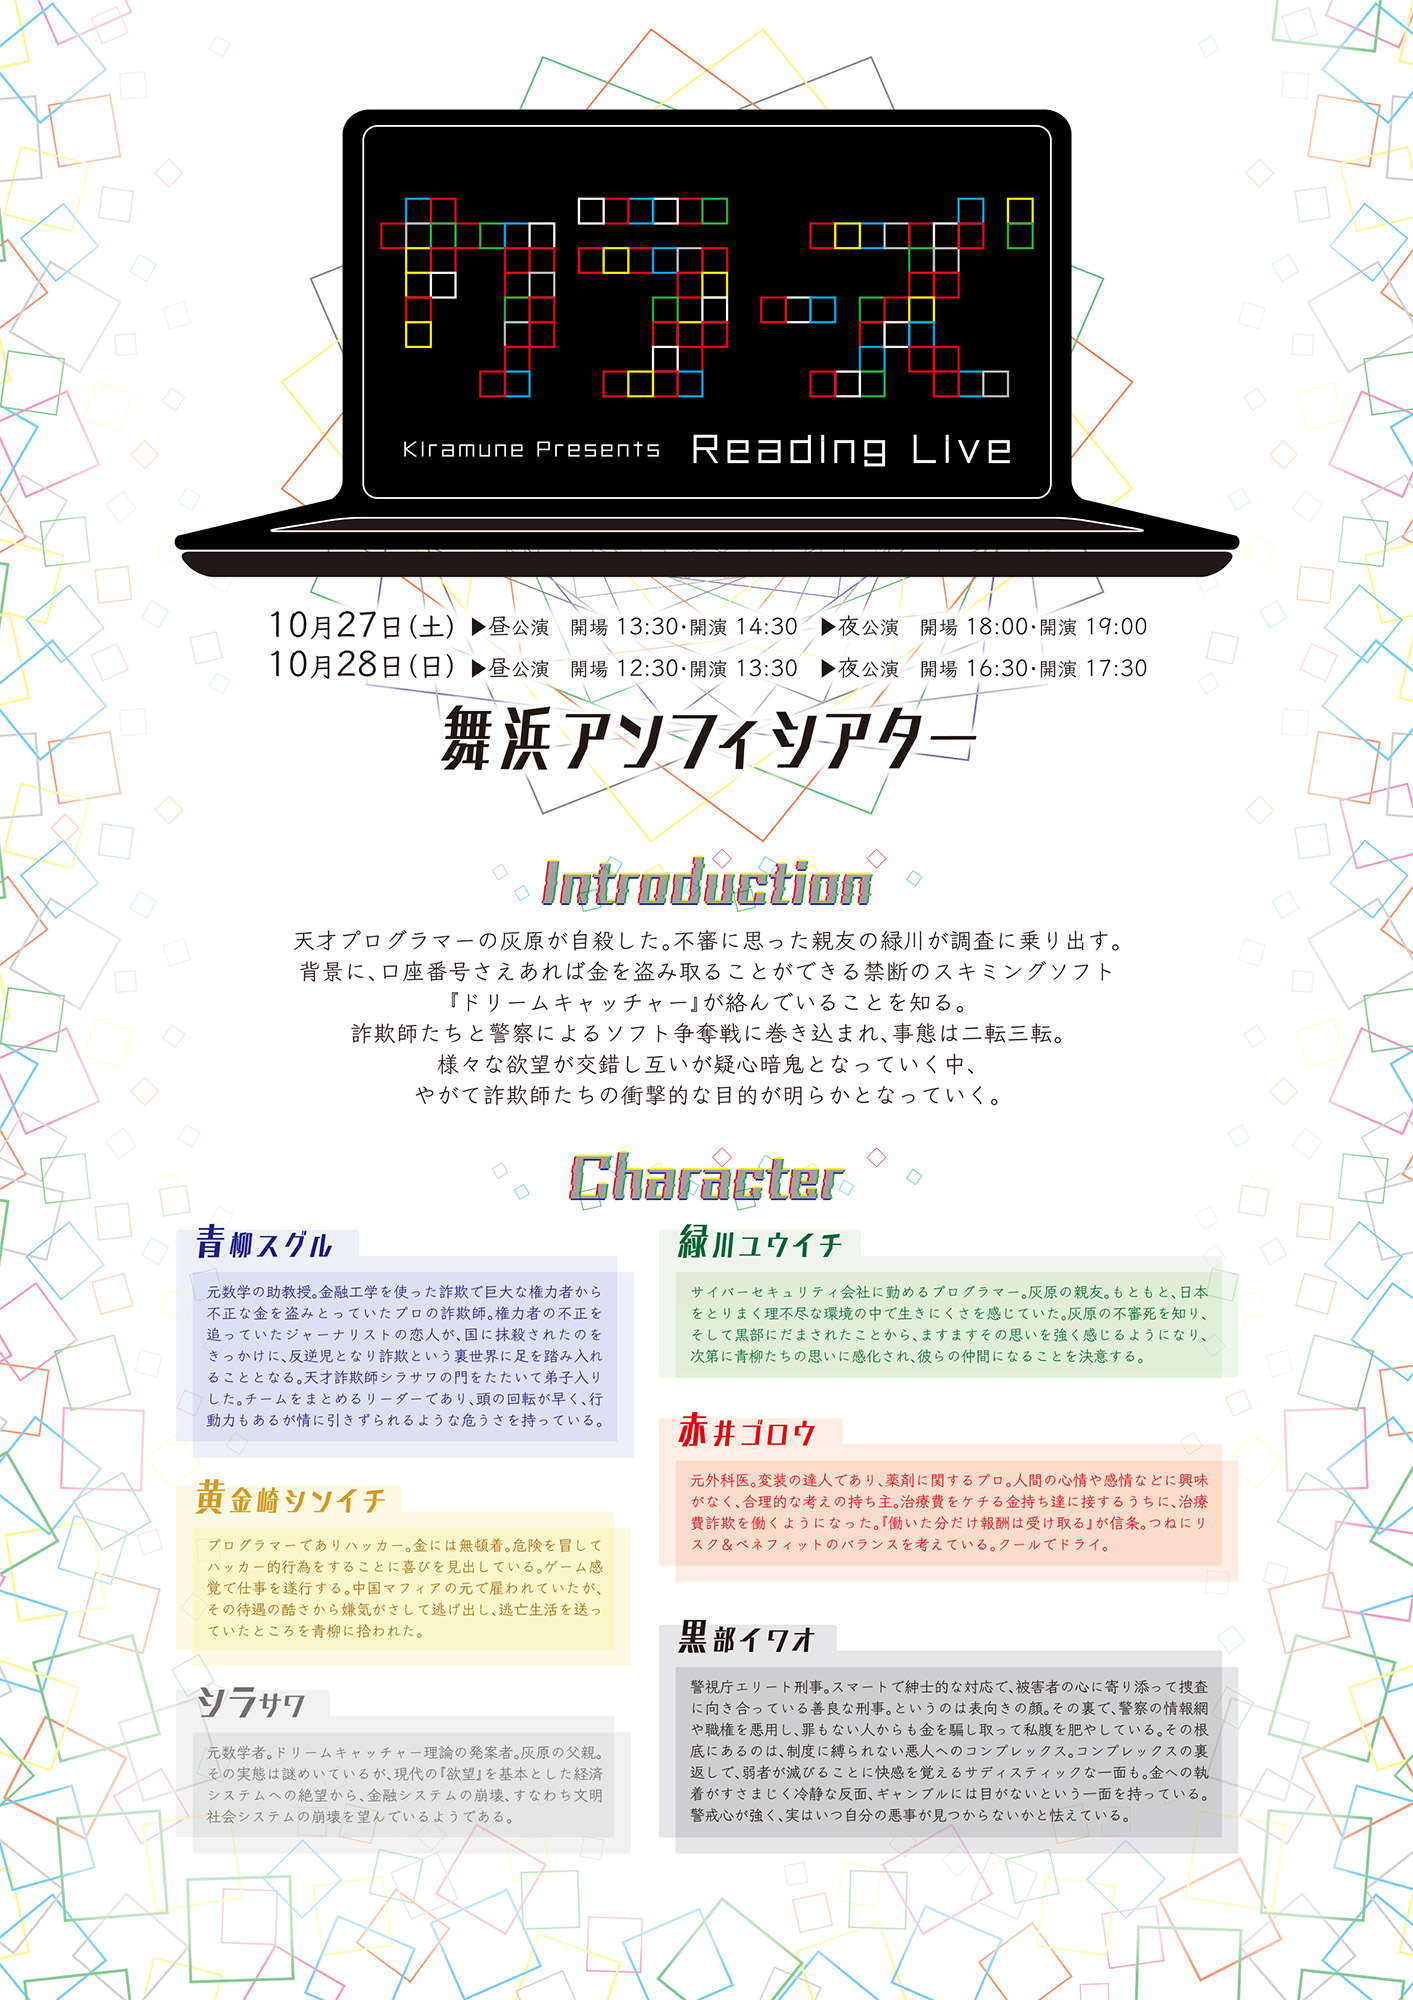 Kiramune Presents リーディングライブ カラーズ Kiramune Official Site